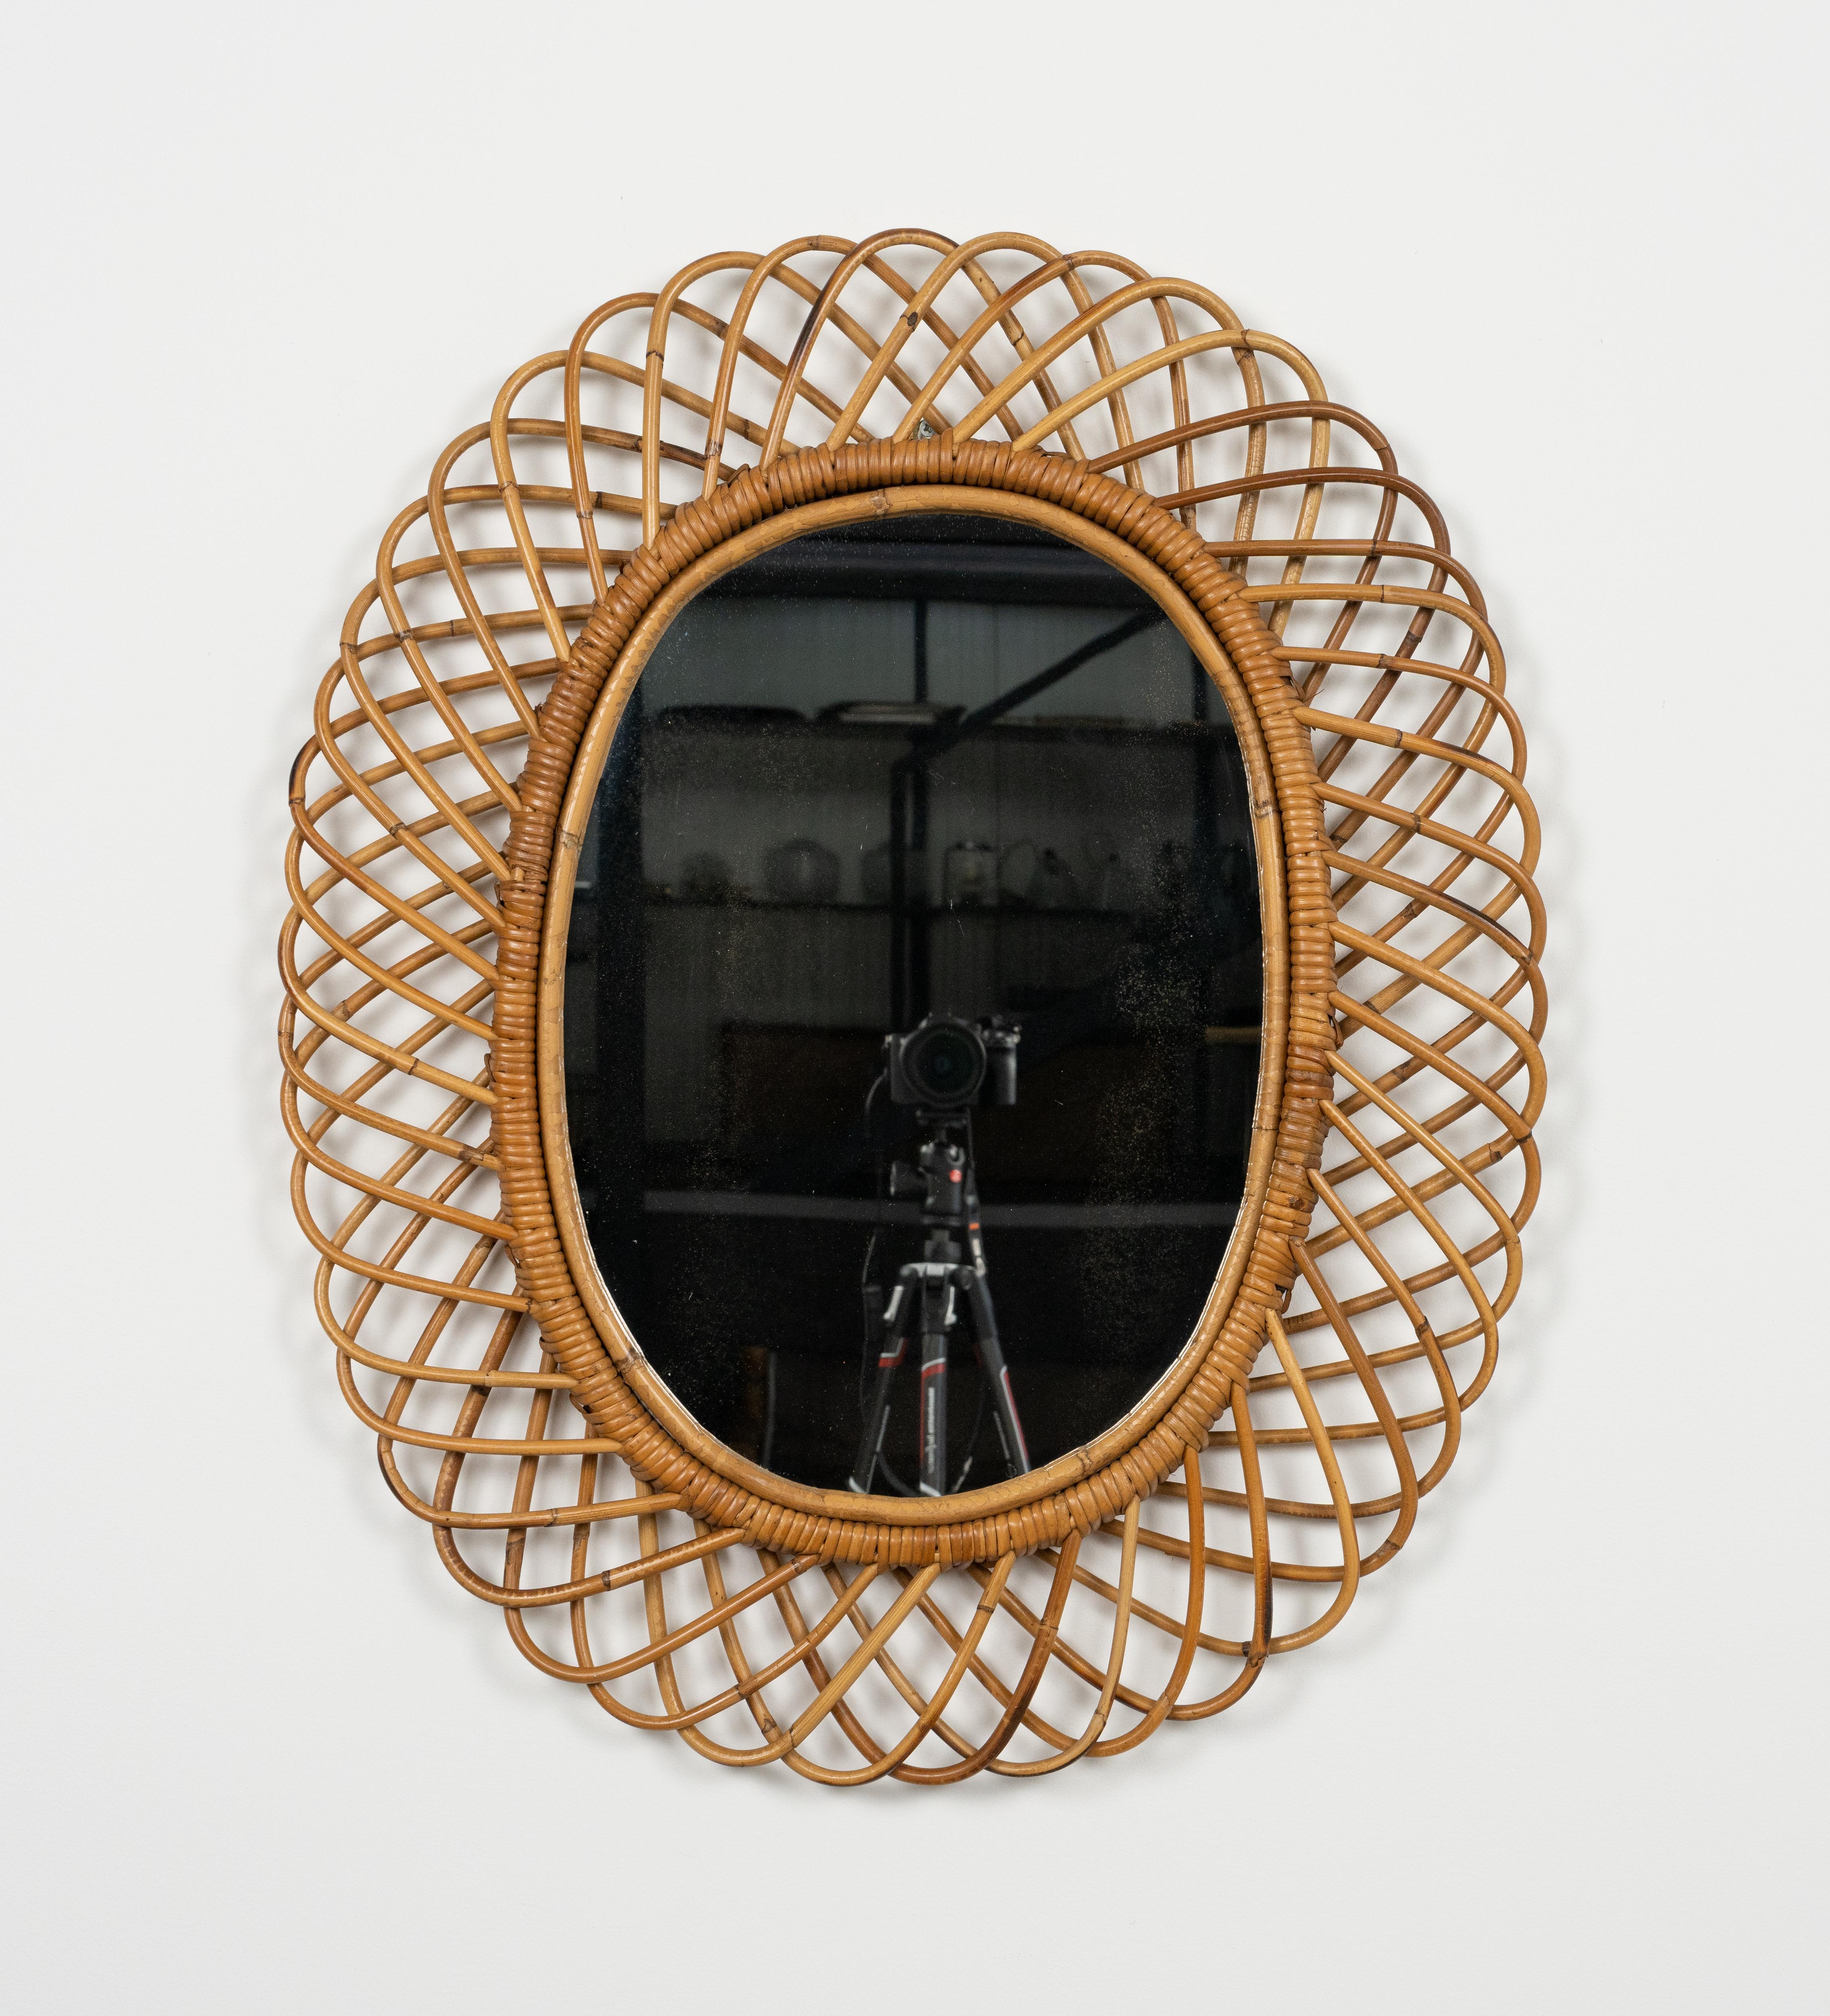 Italian Midcentury Rattan and Bamboo Oval Wall Mirror by Franco Albini, Italy 1960s